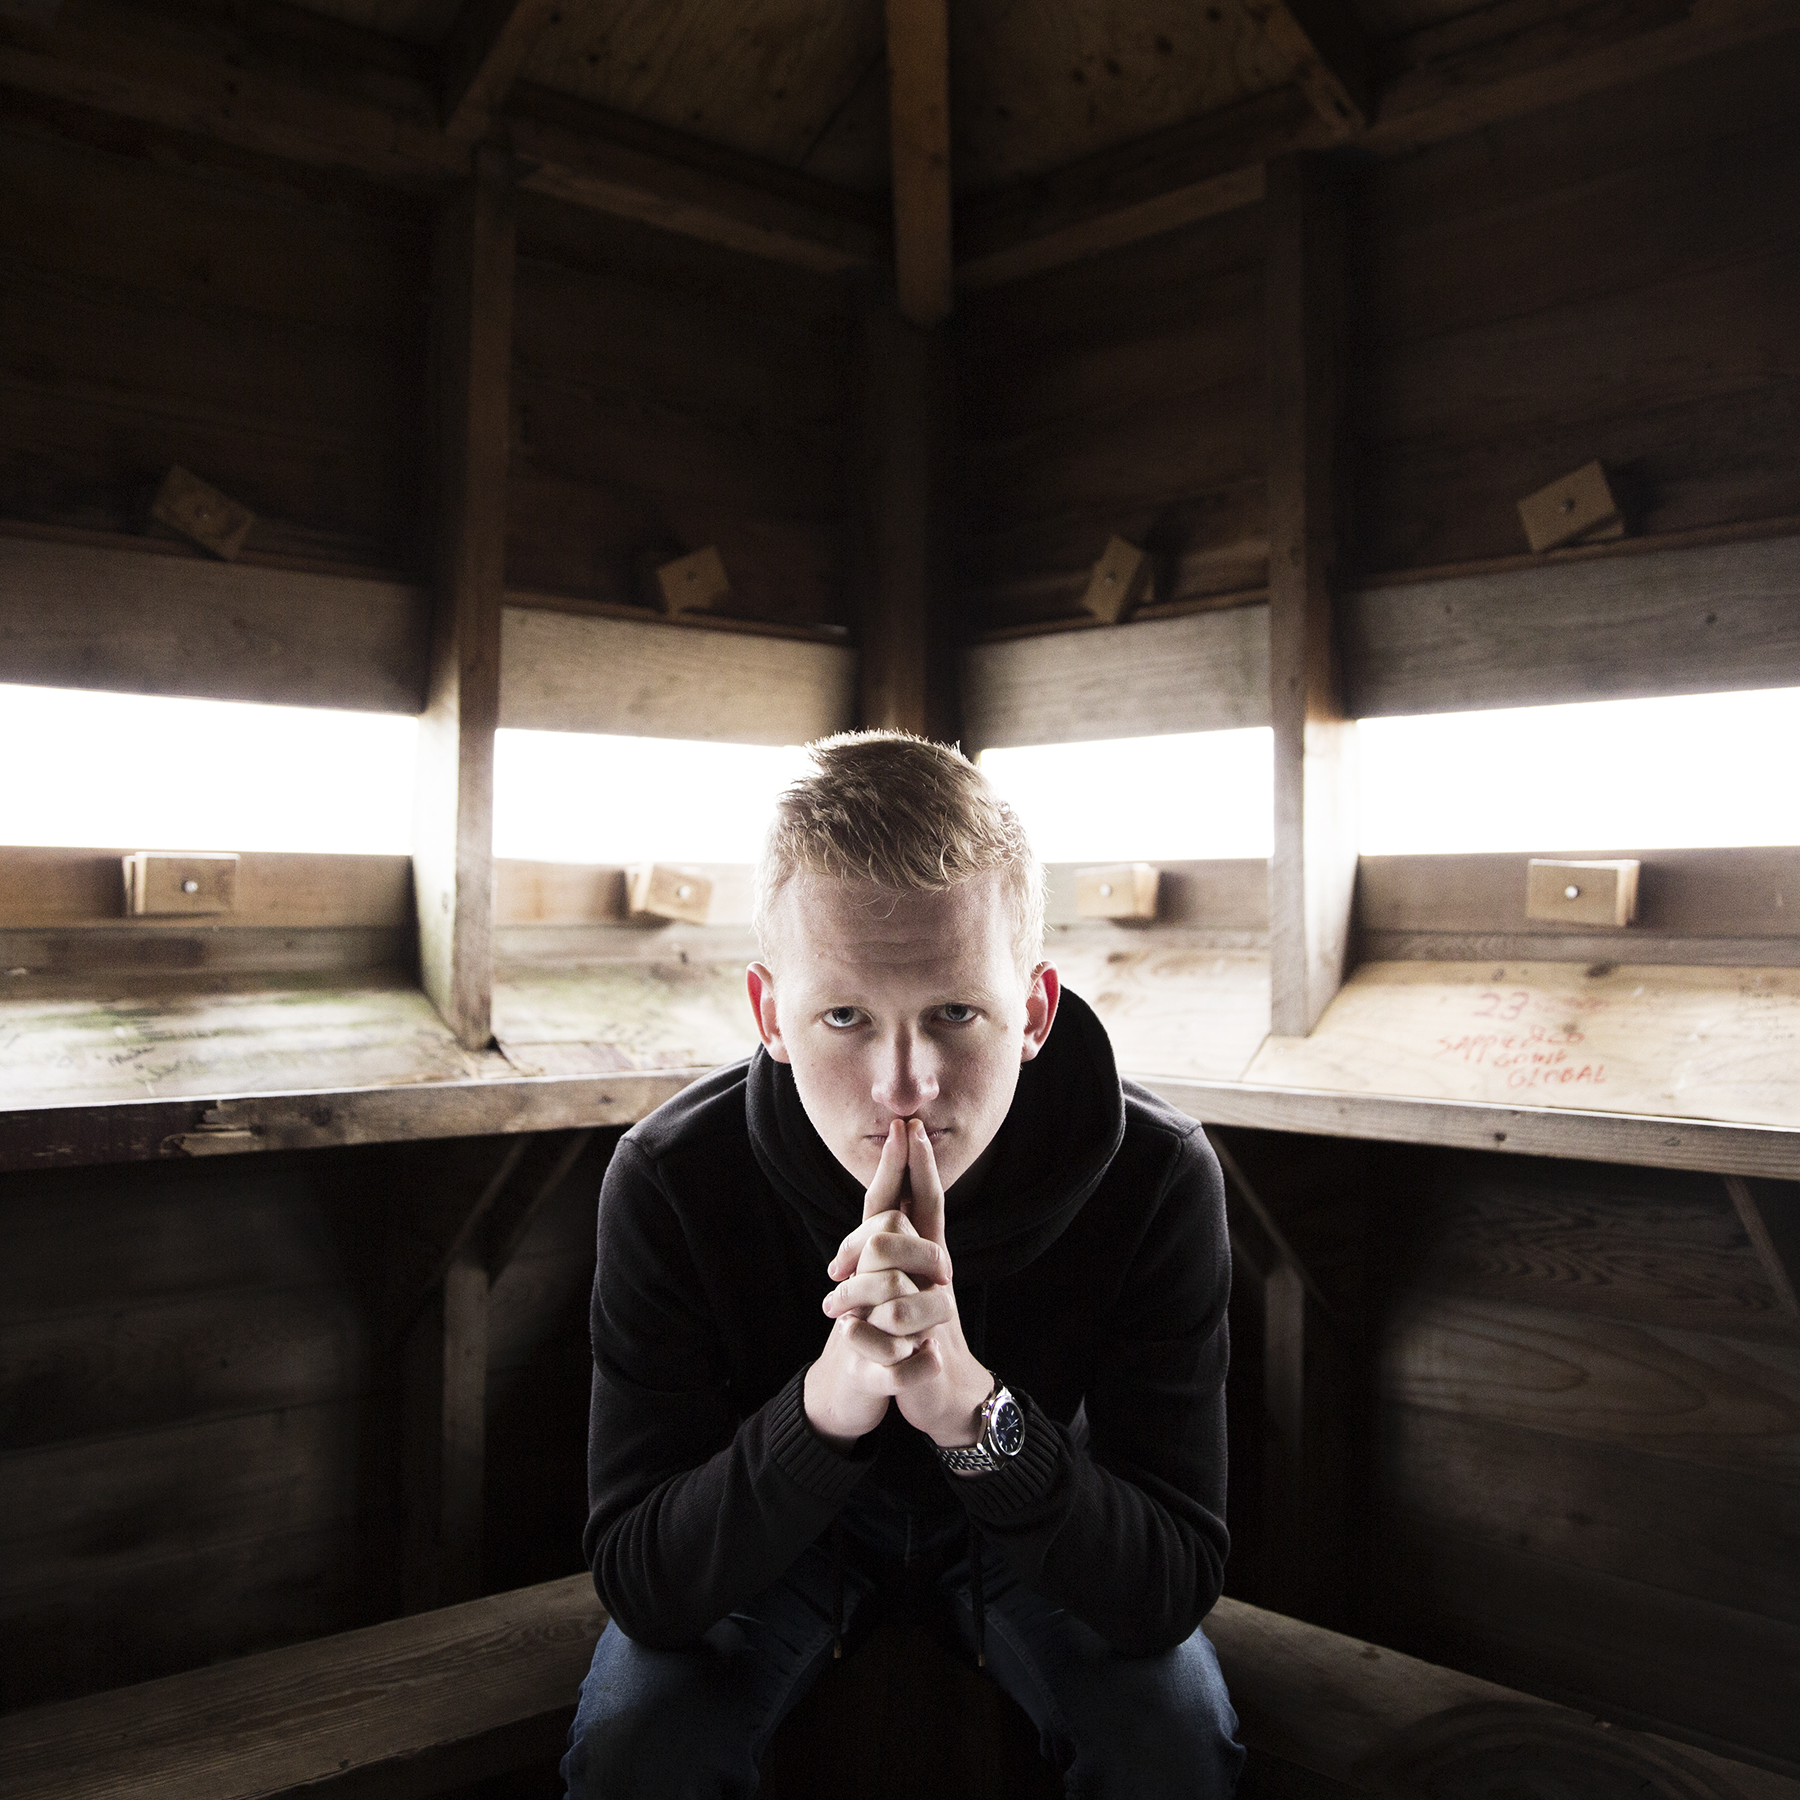 Lars koehoorn – Musicien, Compositeur & Auteur